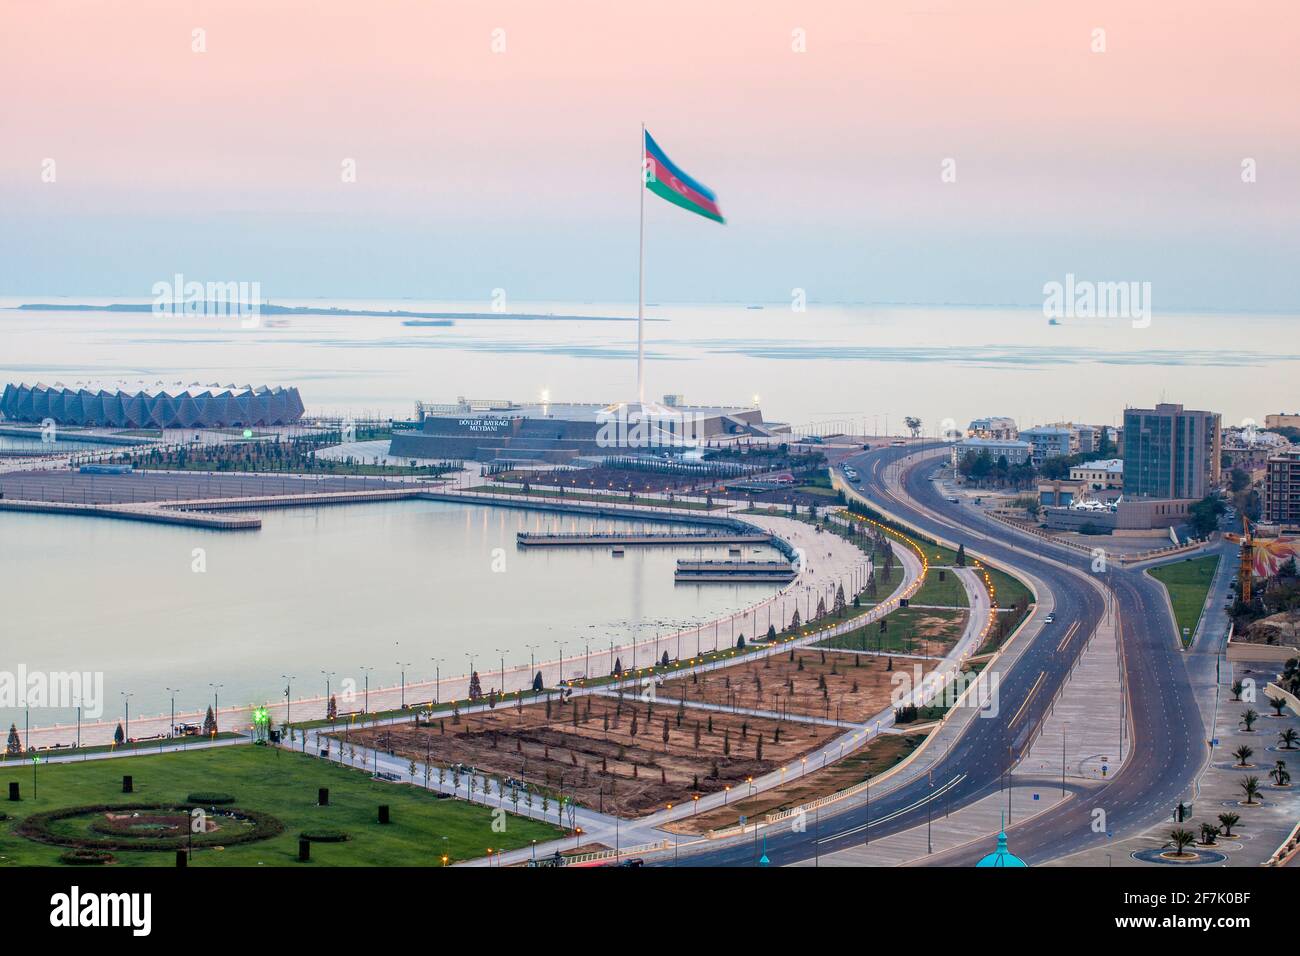 Azerbaijan, Baku, View of Baku Bay looking towards Baku Crystal Hall and the World's second Tallest Flagmast Stock Photo